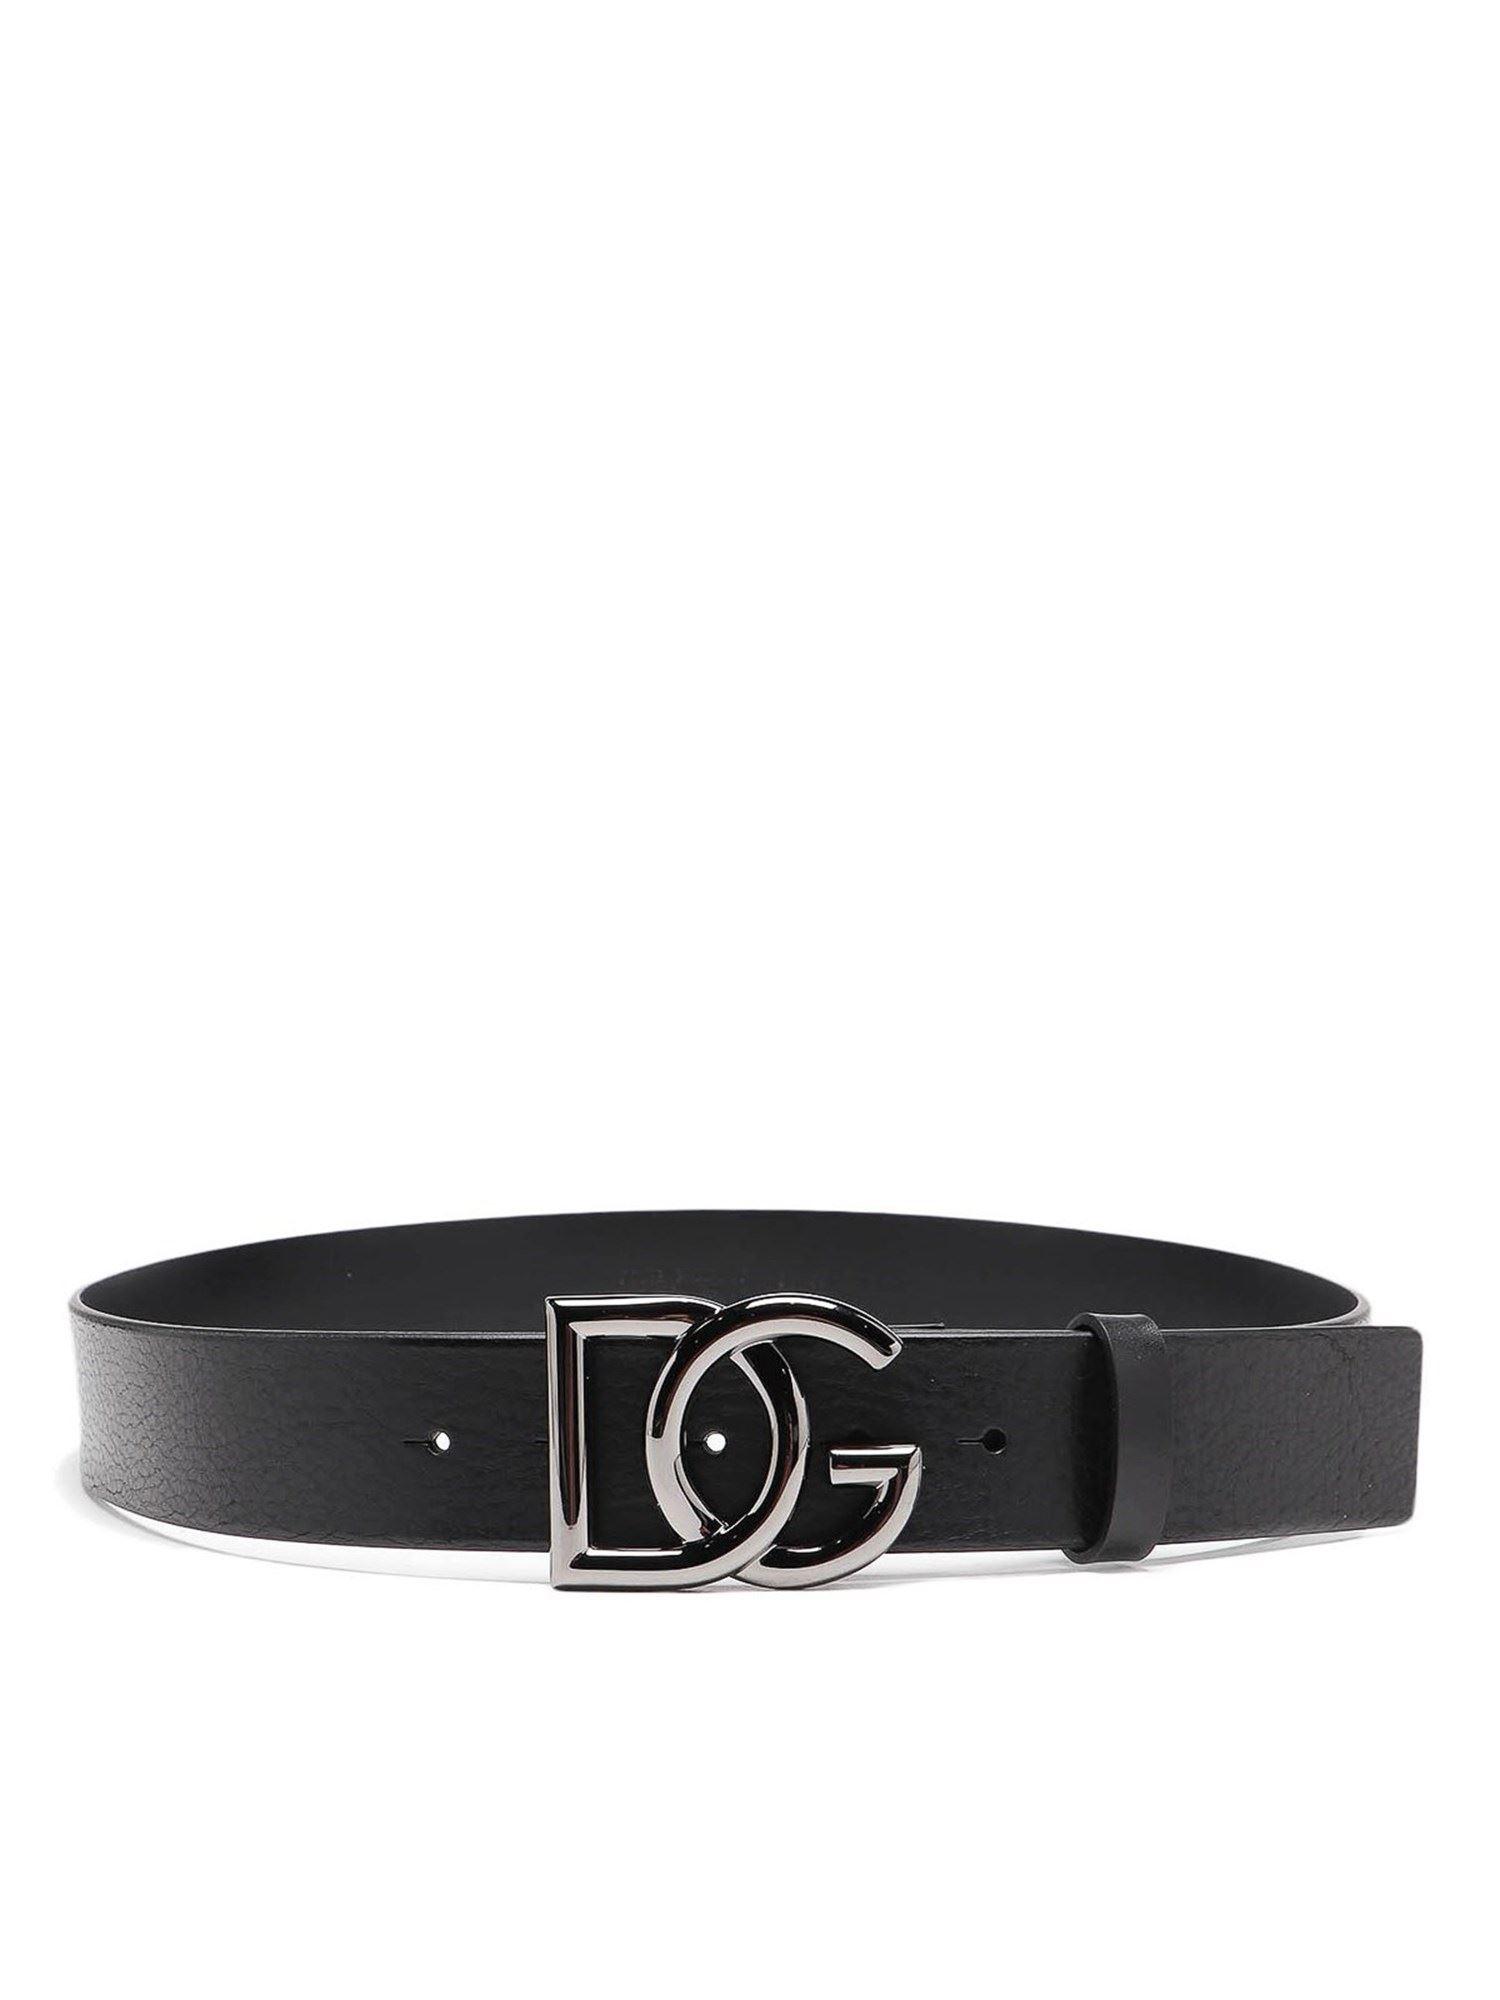 Dolce & Gabbana Dg Leather Belt in Black for Men - Lyst